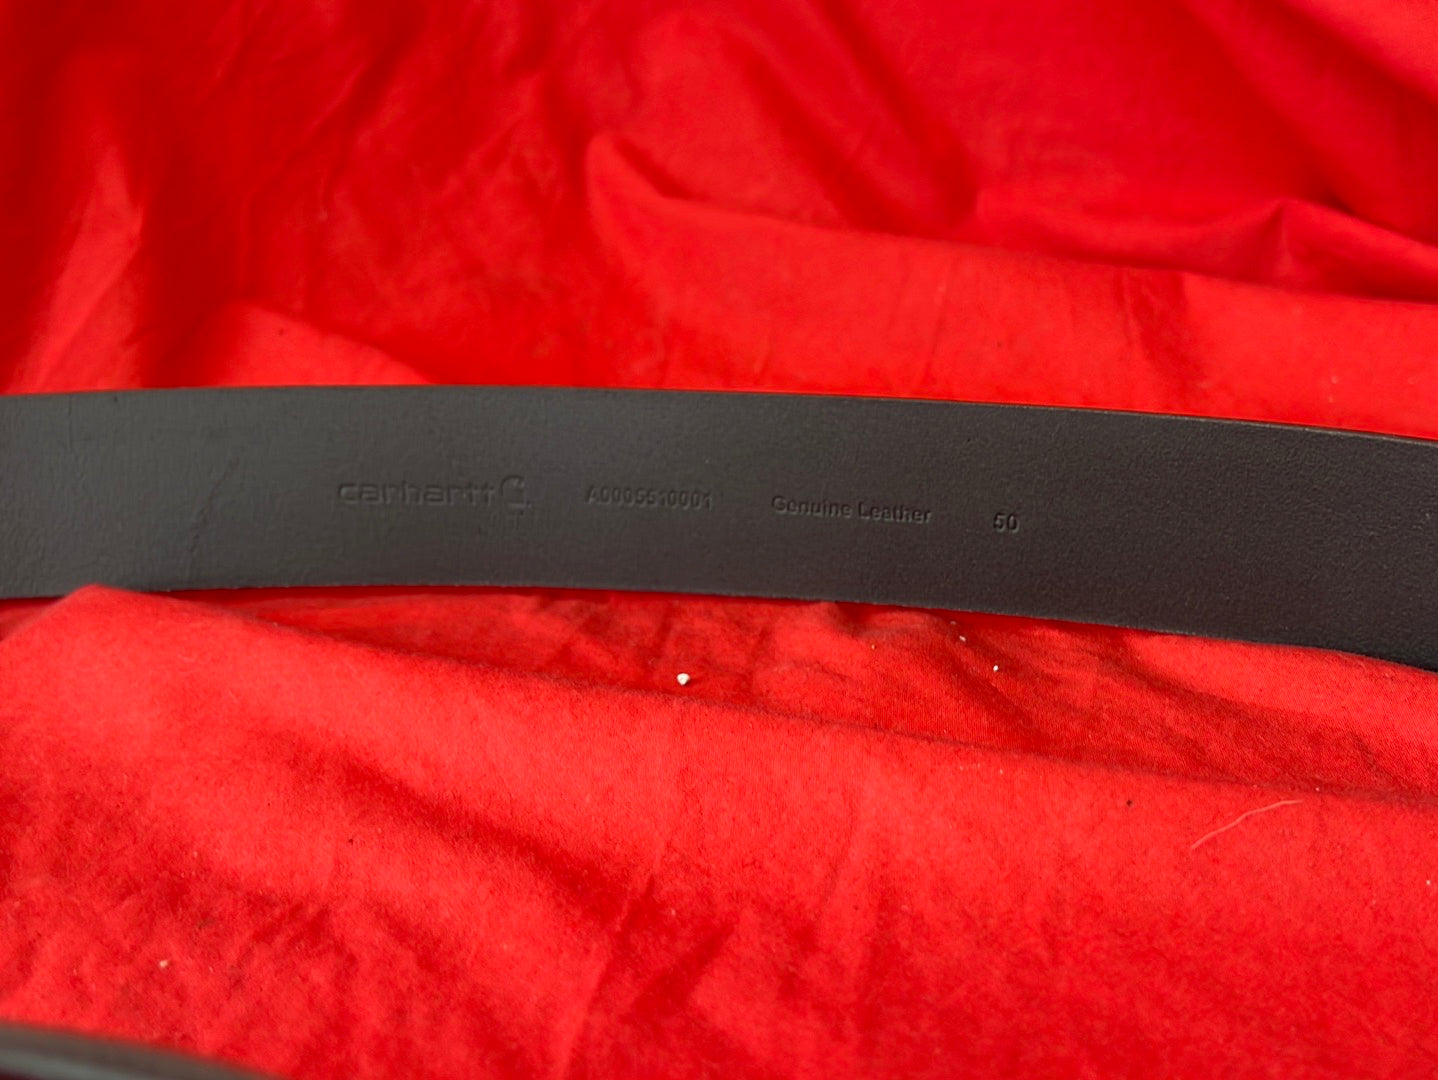 CARHARTT -- Anvil Black Leather Belt -- Size 50